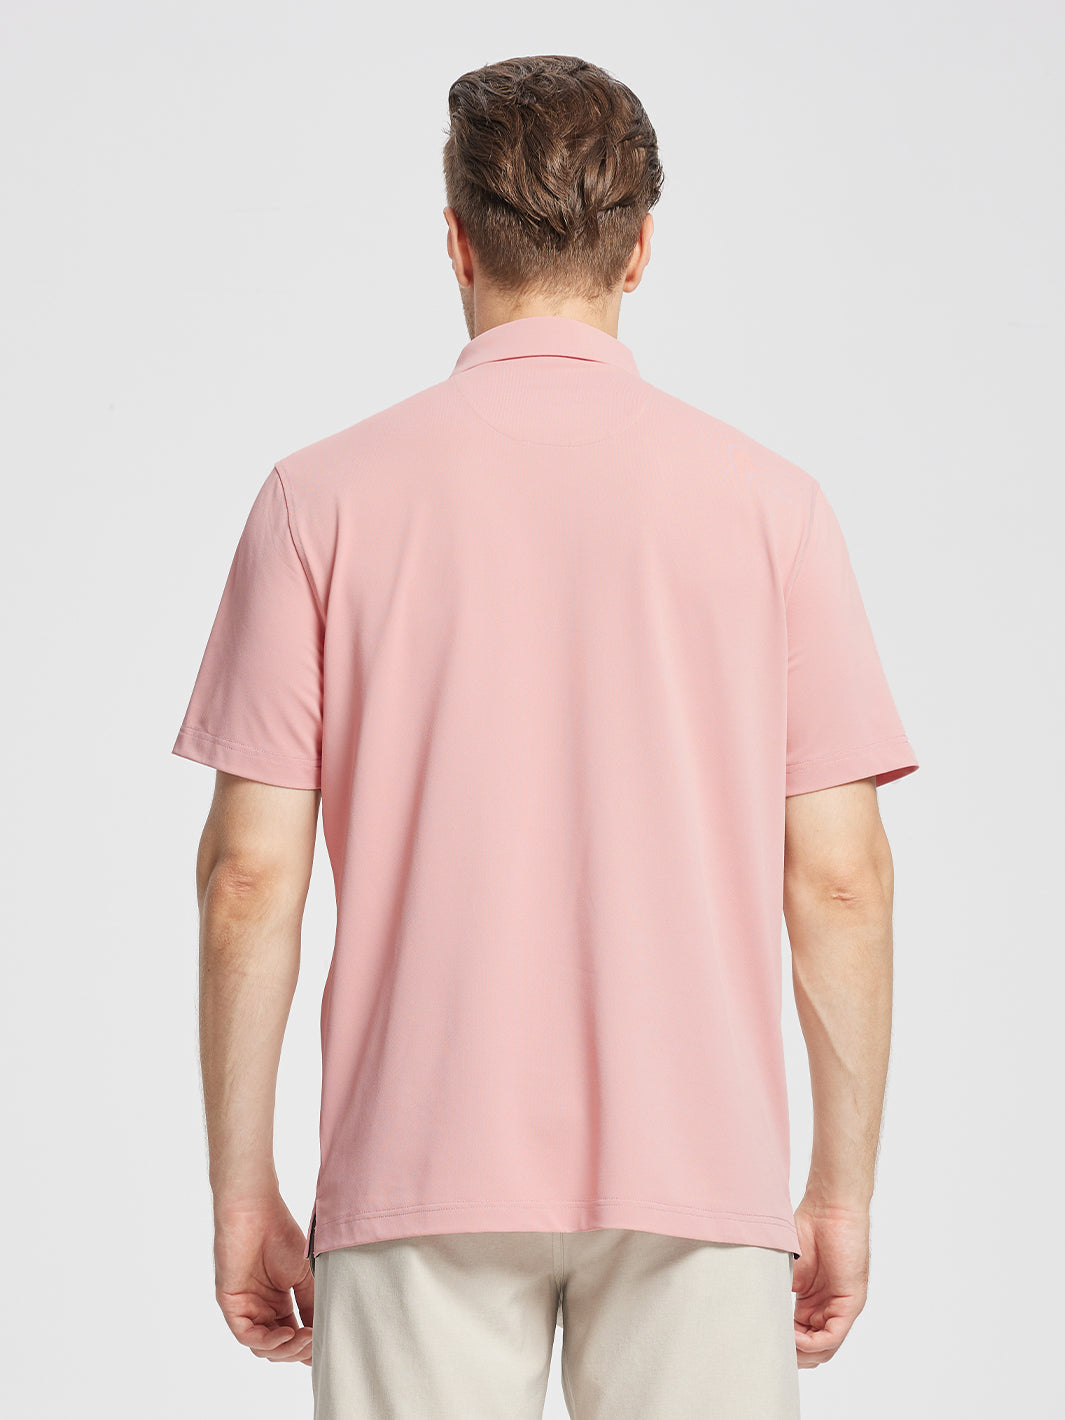 Men's Dry Fit Pique Golf Shirts-Pale Pink